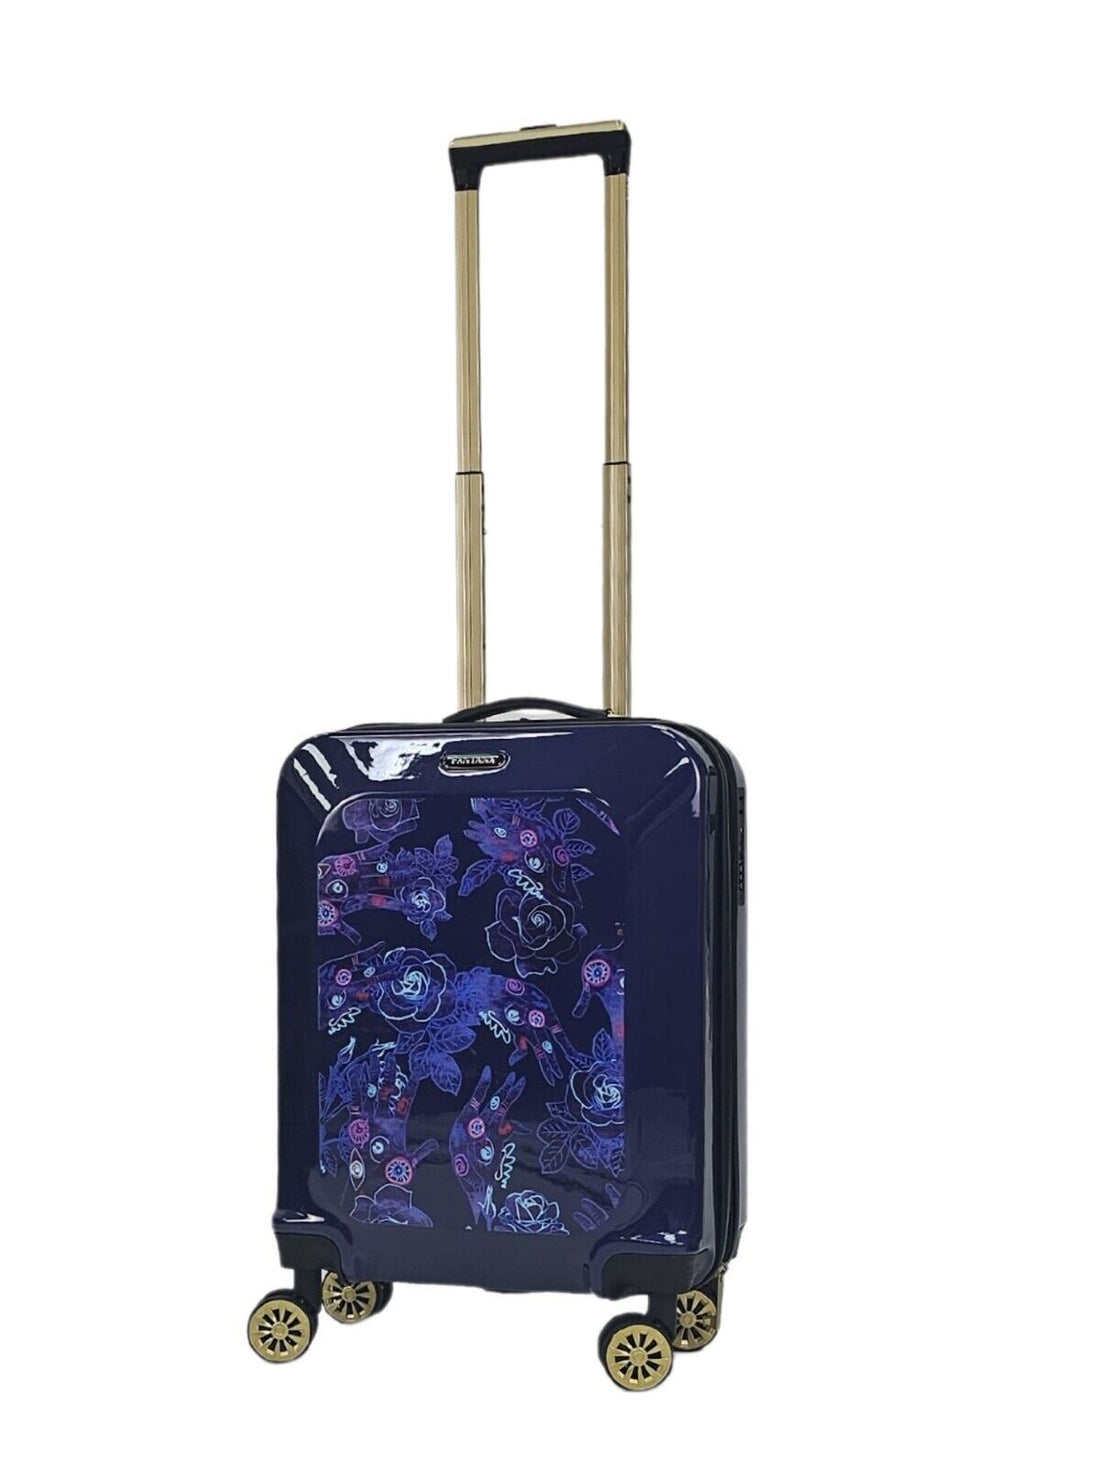 Butler Cabin Hard Shell Suitcase in Blue